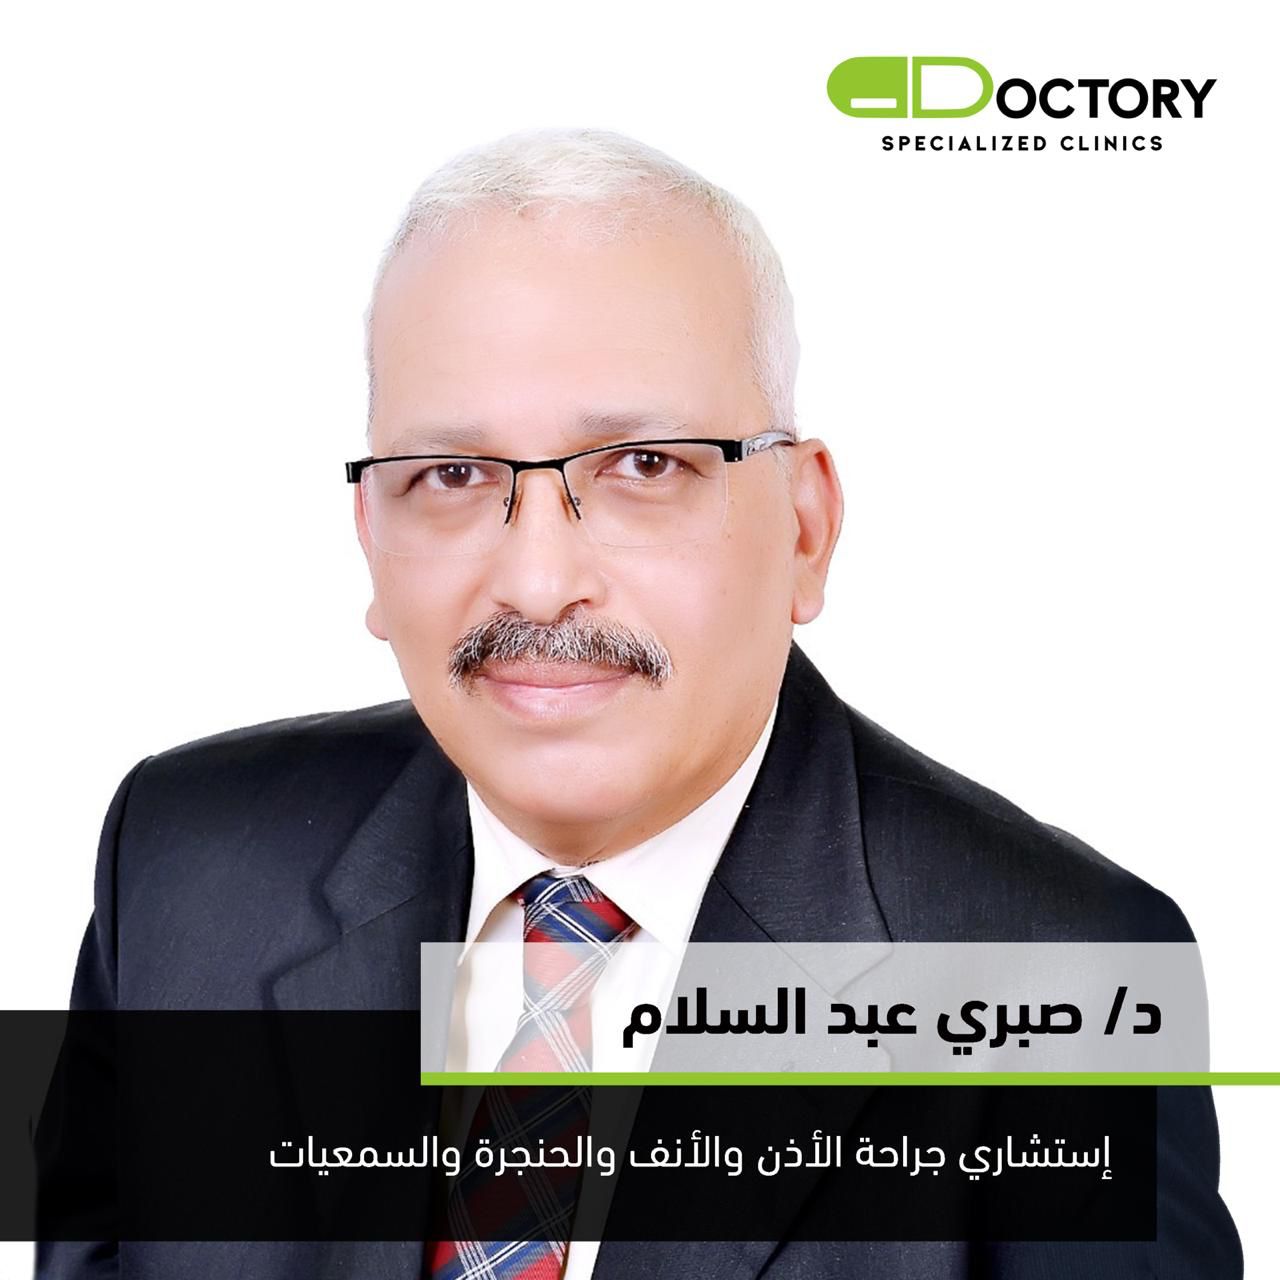 Dr. Sabry Abd El Salam